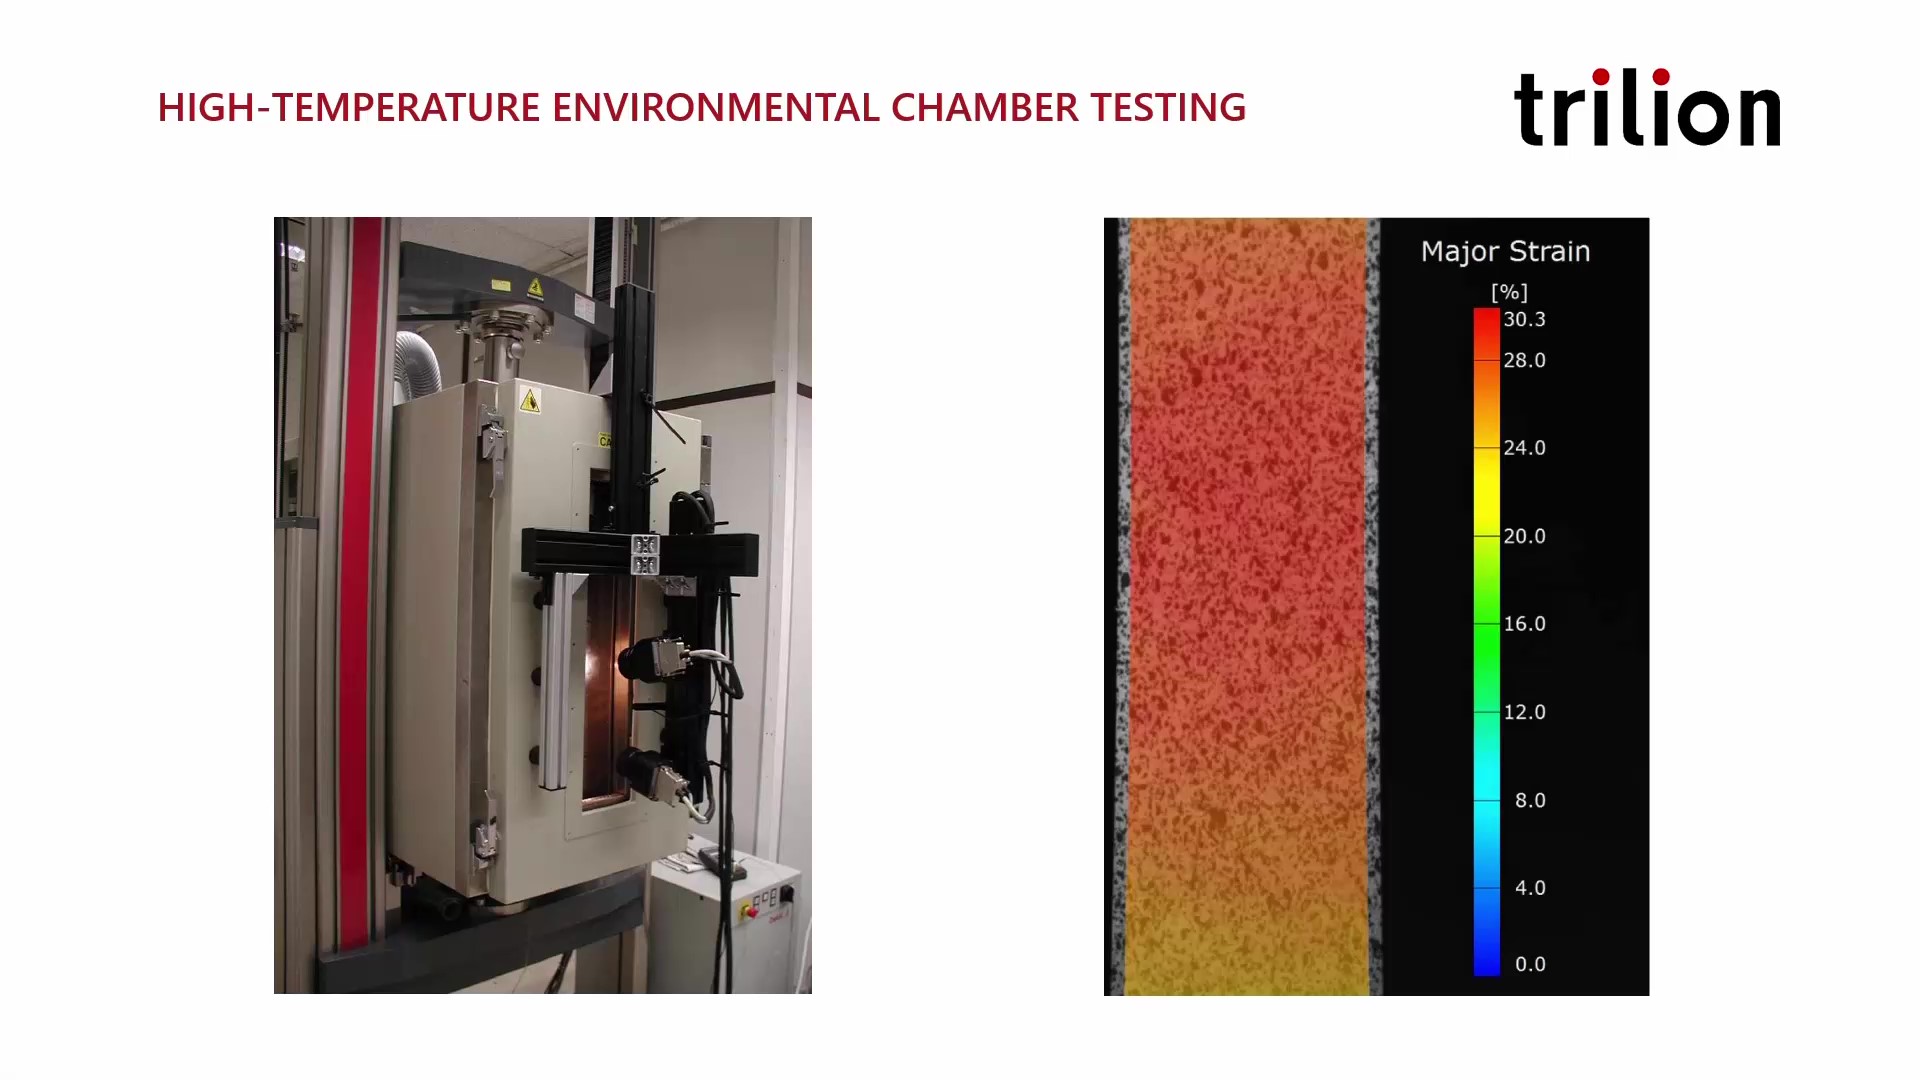 High-Temperature Environmental Chamber Testing using ARAMIS optical strain system